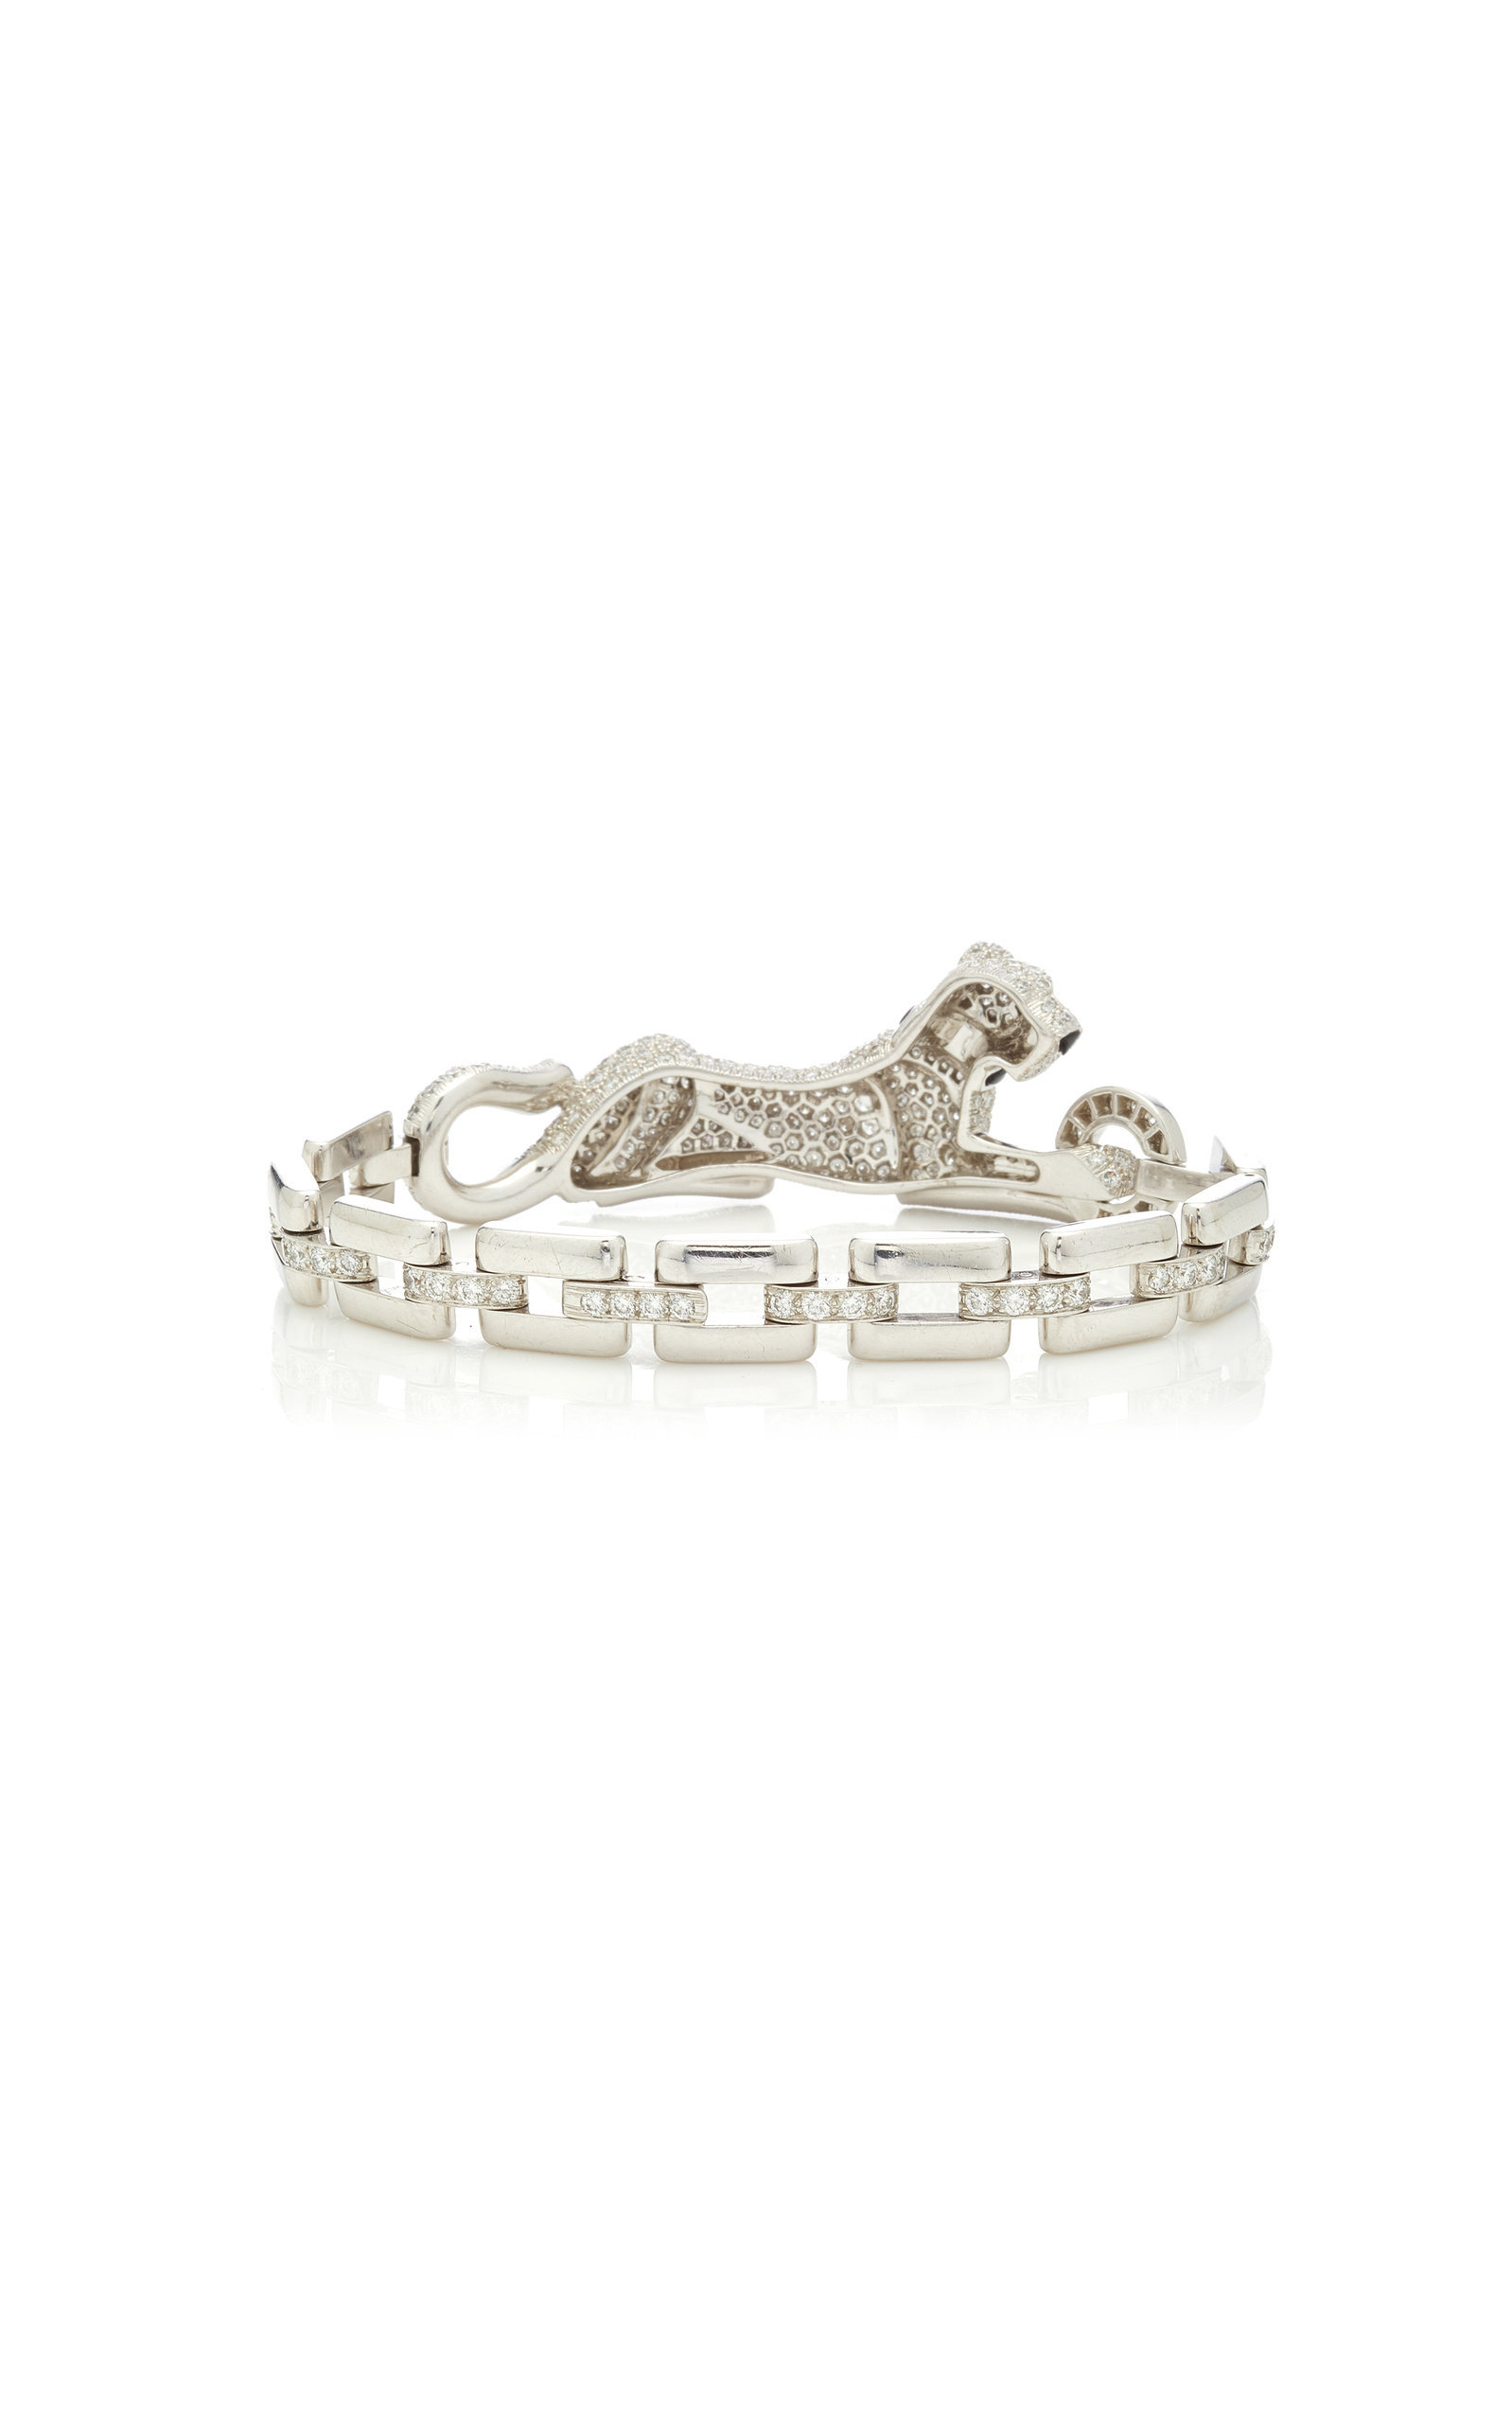 CRHP601141 - Panthère de Cartier High Jewelry bracelet - Platinum,  emeralds, onyx, diamonds - Cartier